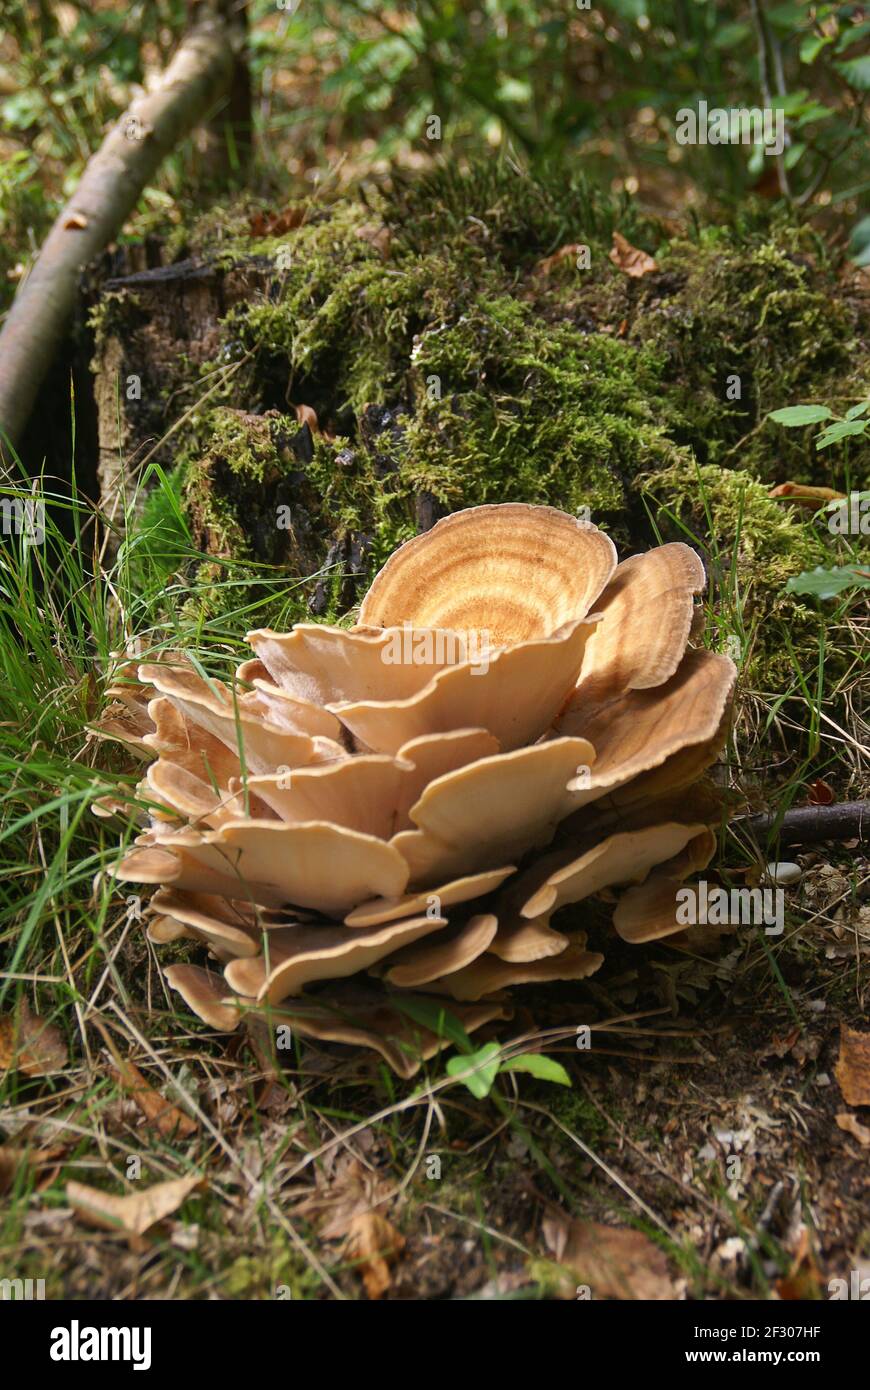 Turkey tail mushroom, Trametes versicolor, on the forest floor Stock Photo